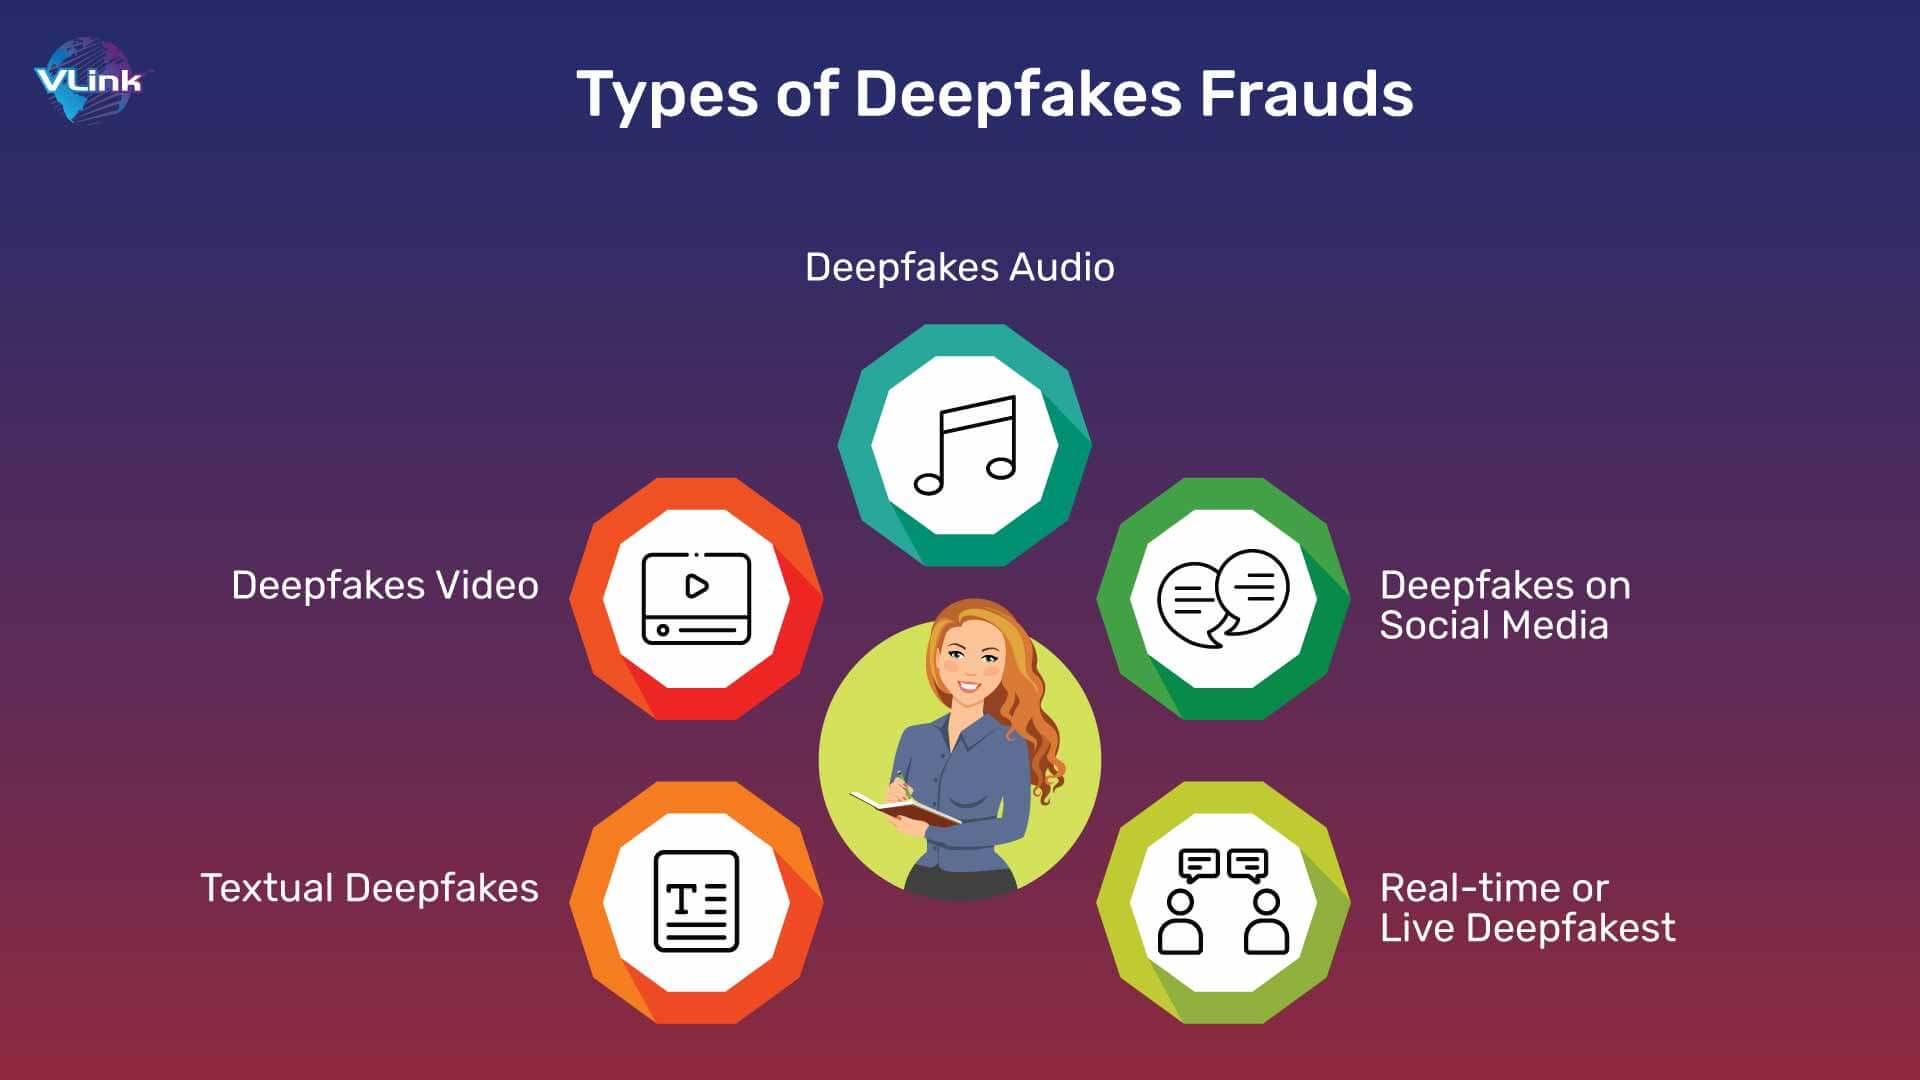 AI Deepfakes Pose Significant Threats